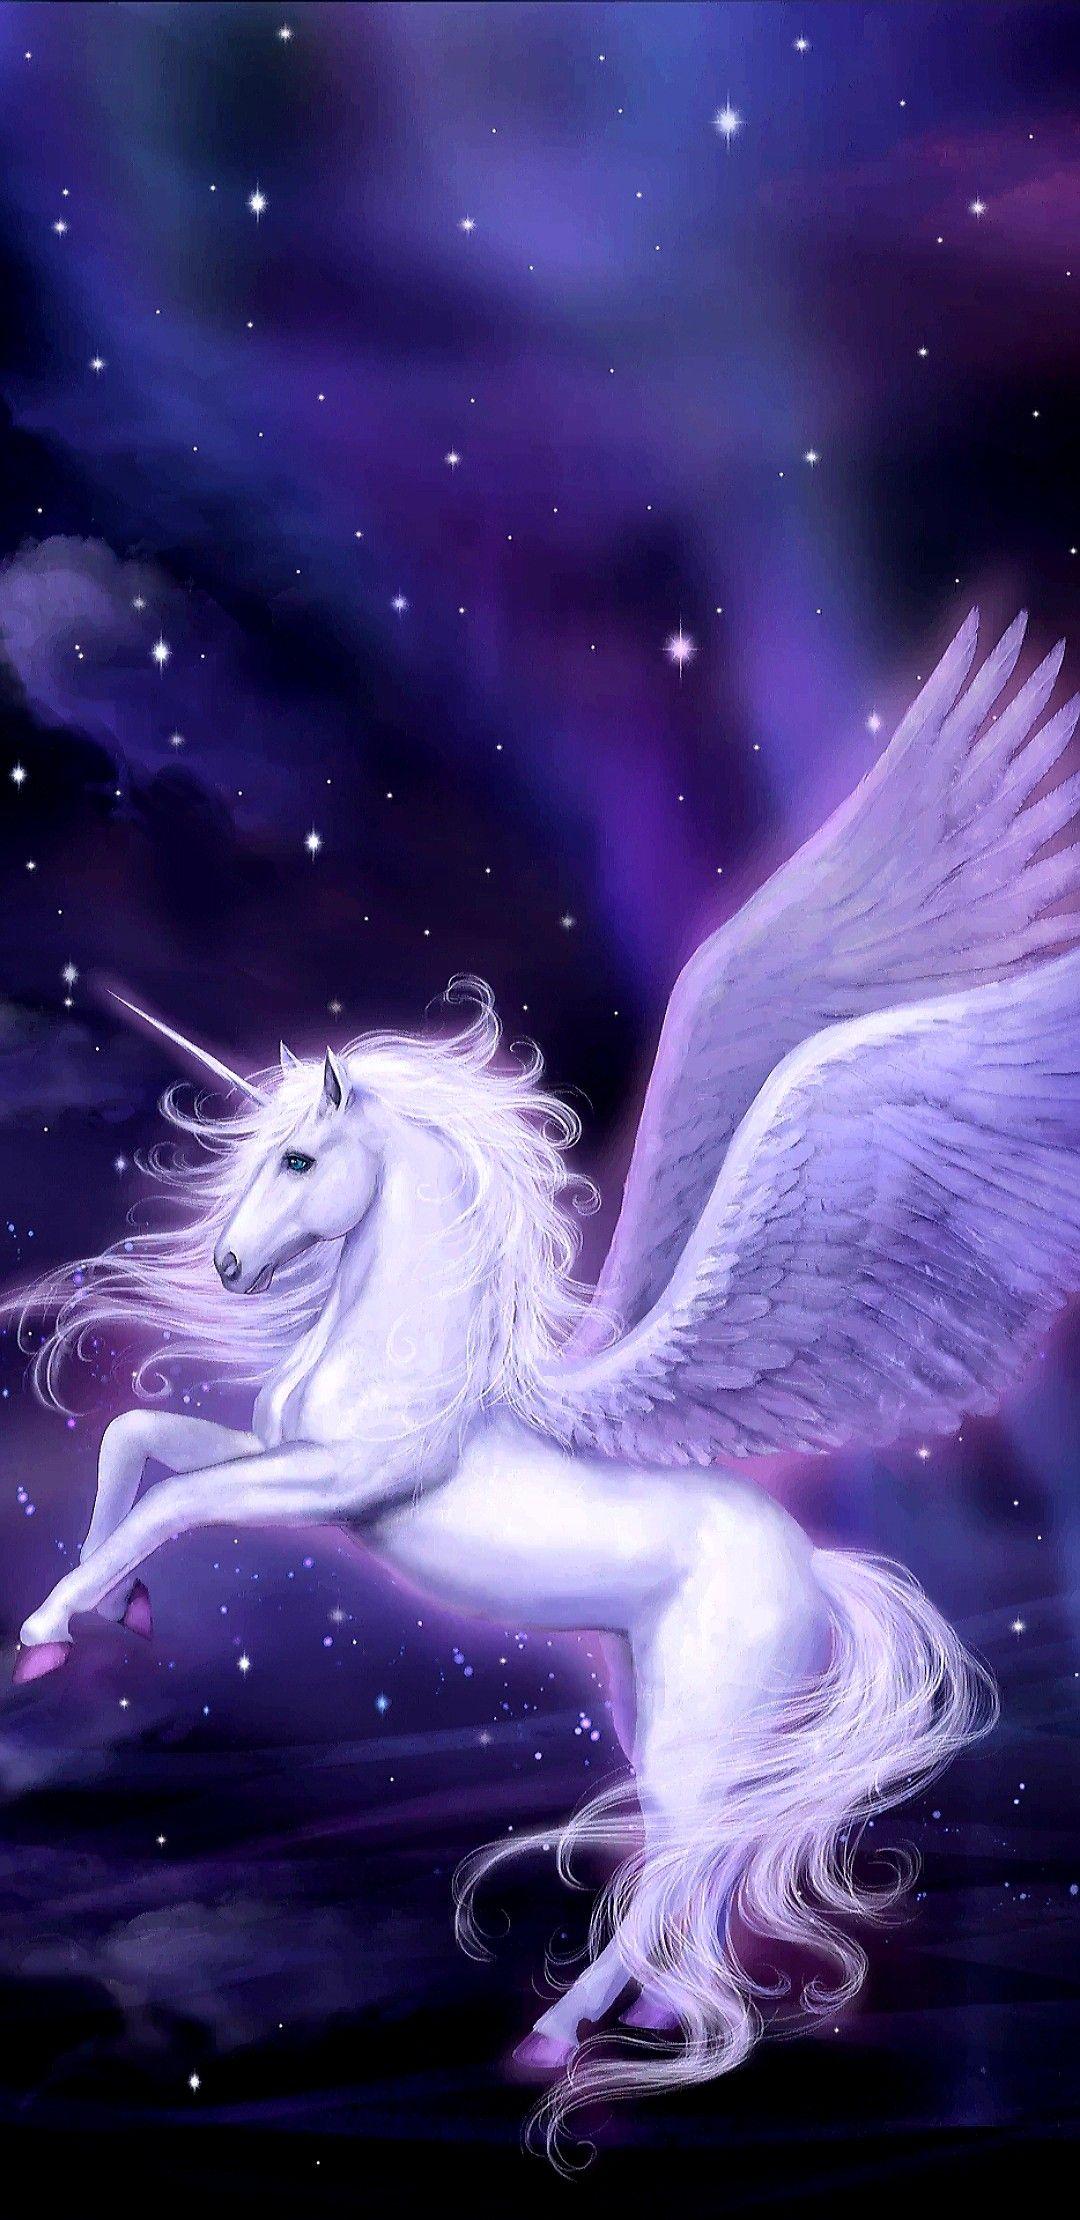 Unicorn / Pegasus Wallpaper. Pretty